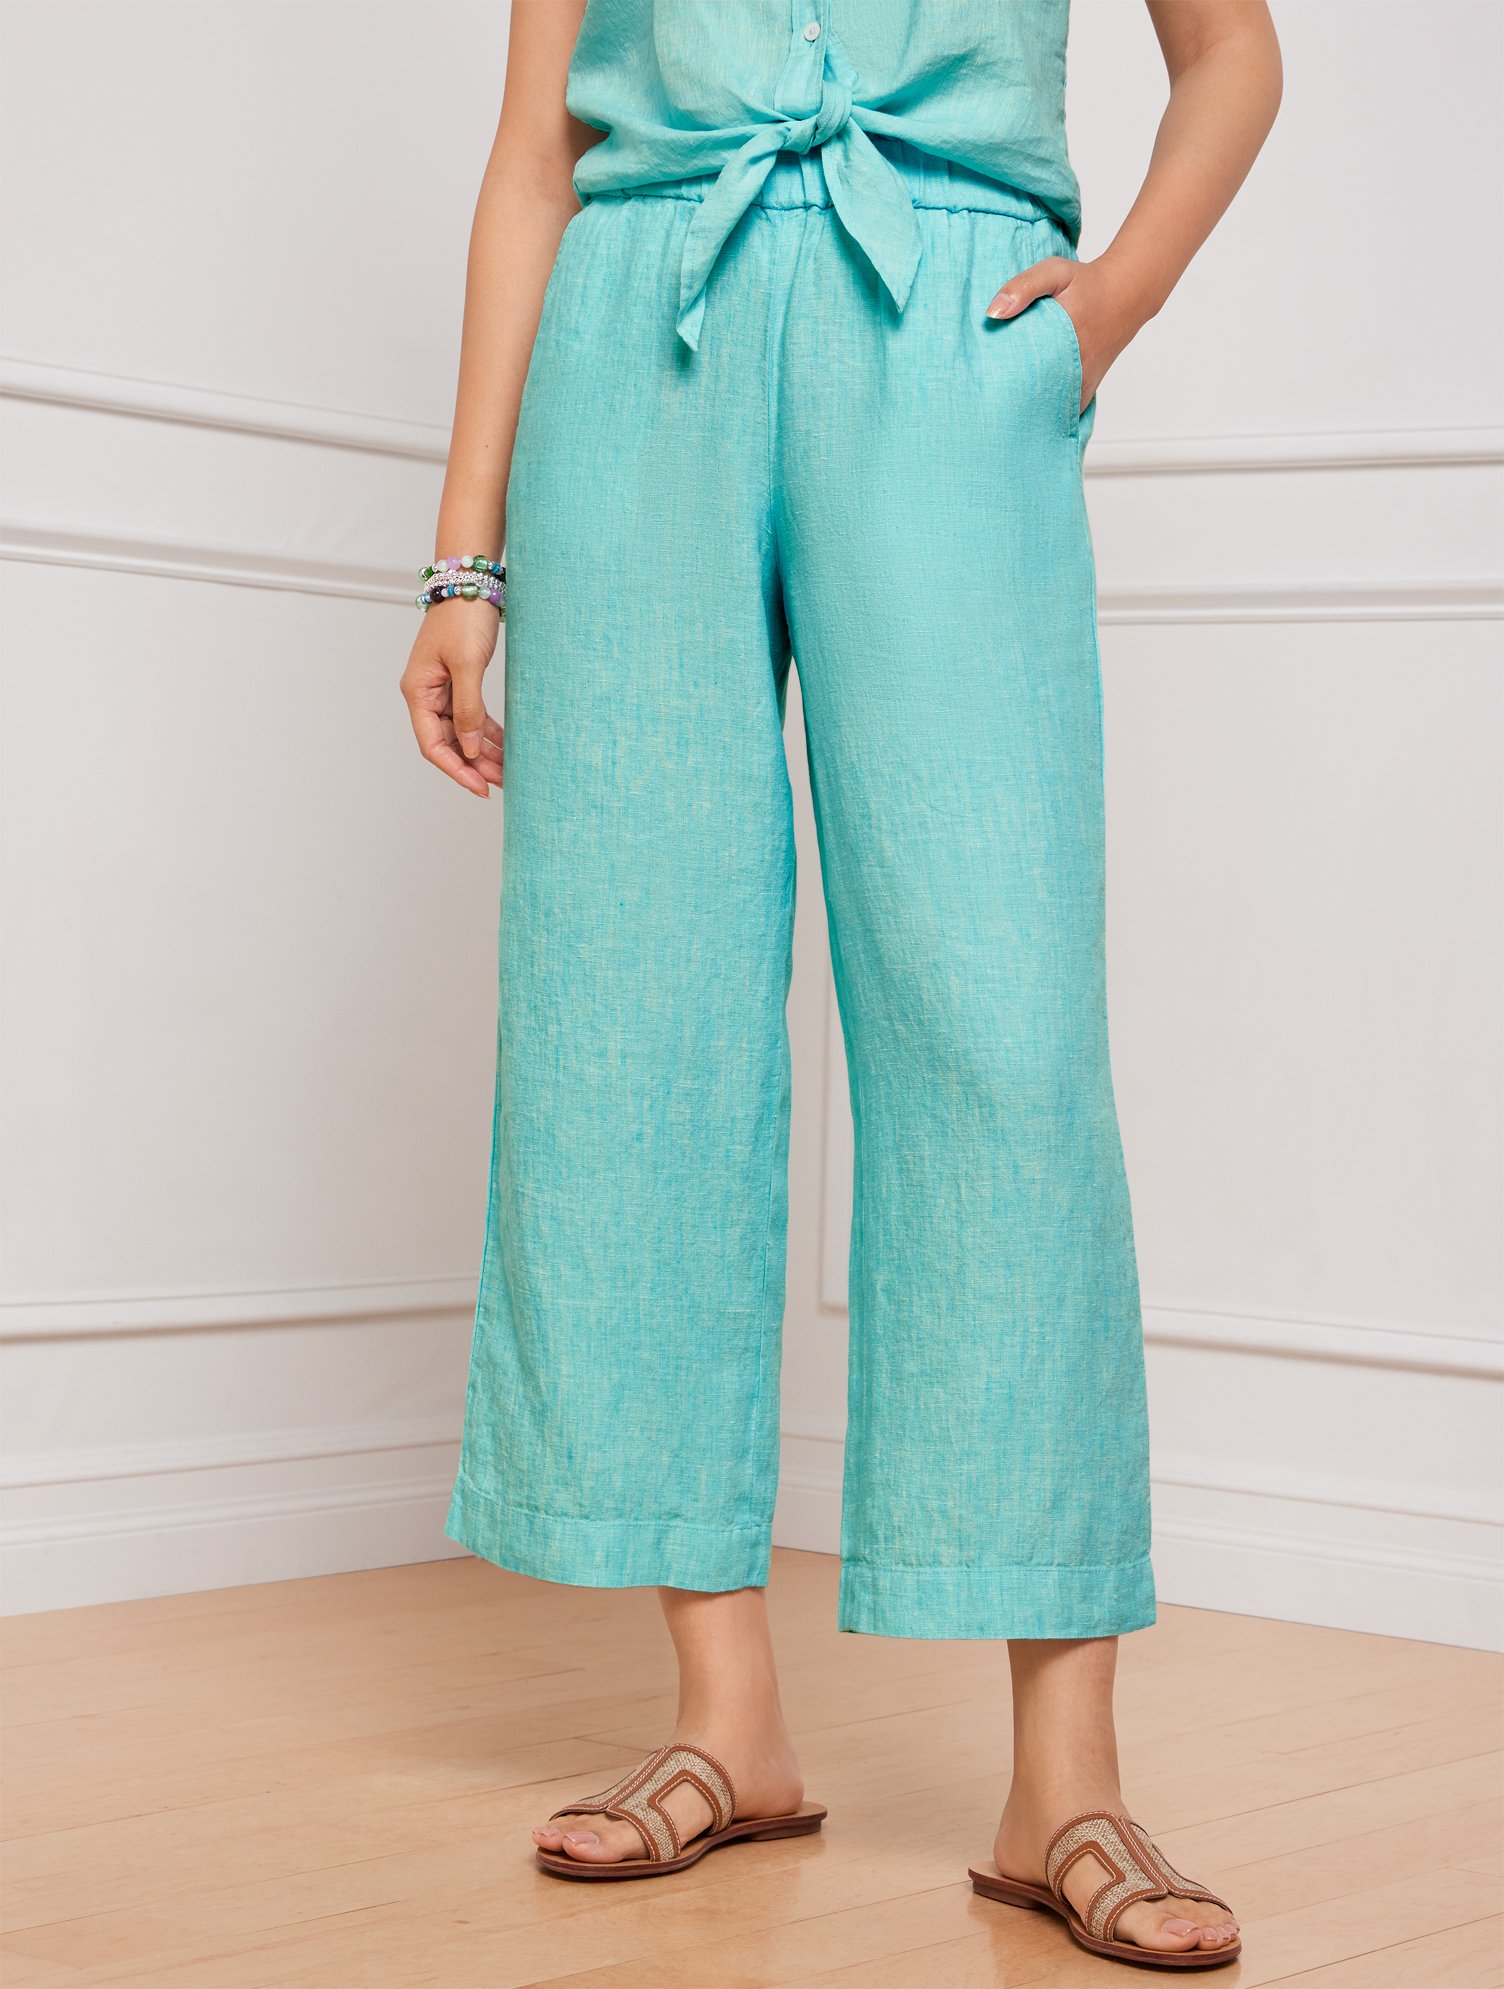 Talbots Plus Size -  Nantucket Washed Linen Wide Leg Crop Pants - Vivid Turquoise/white - X In Vivid Turquoise,white